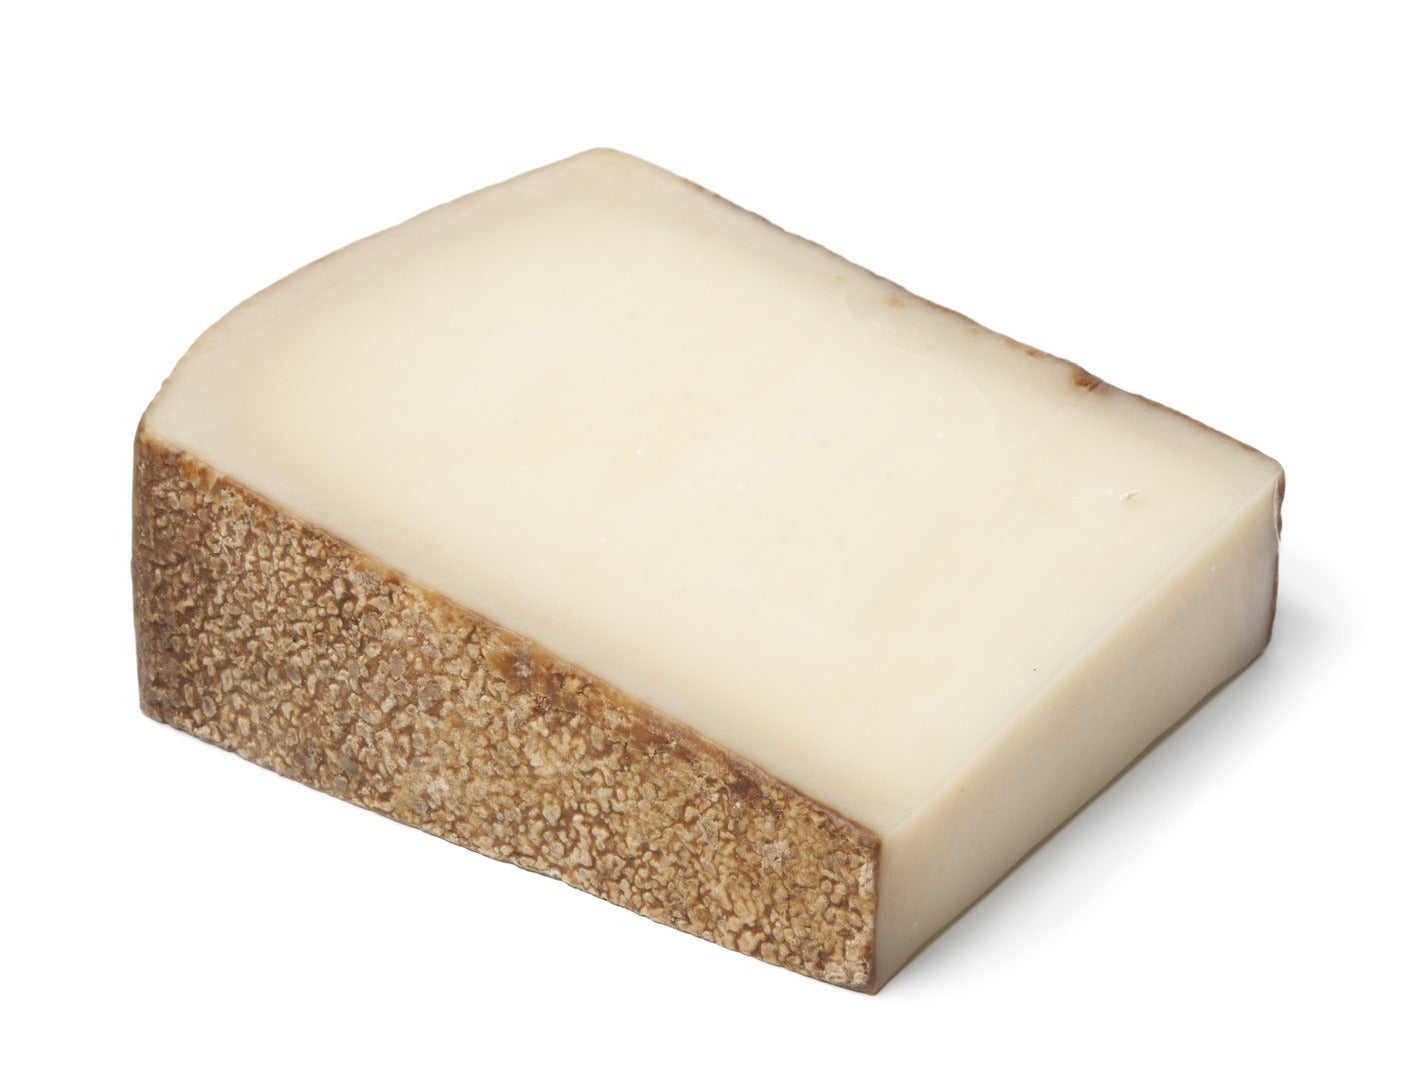 Cheese - Gruyere 8 oz